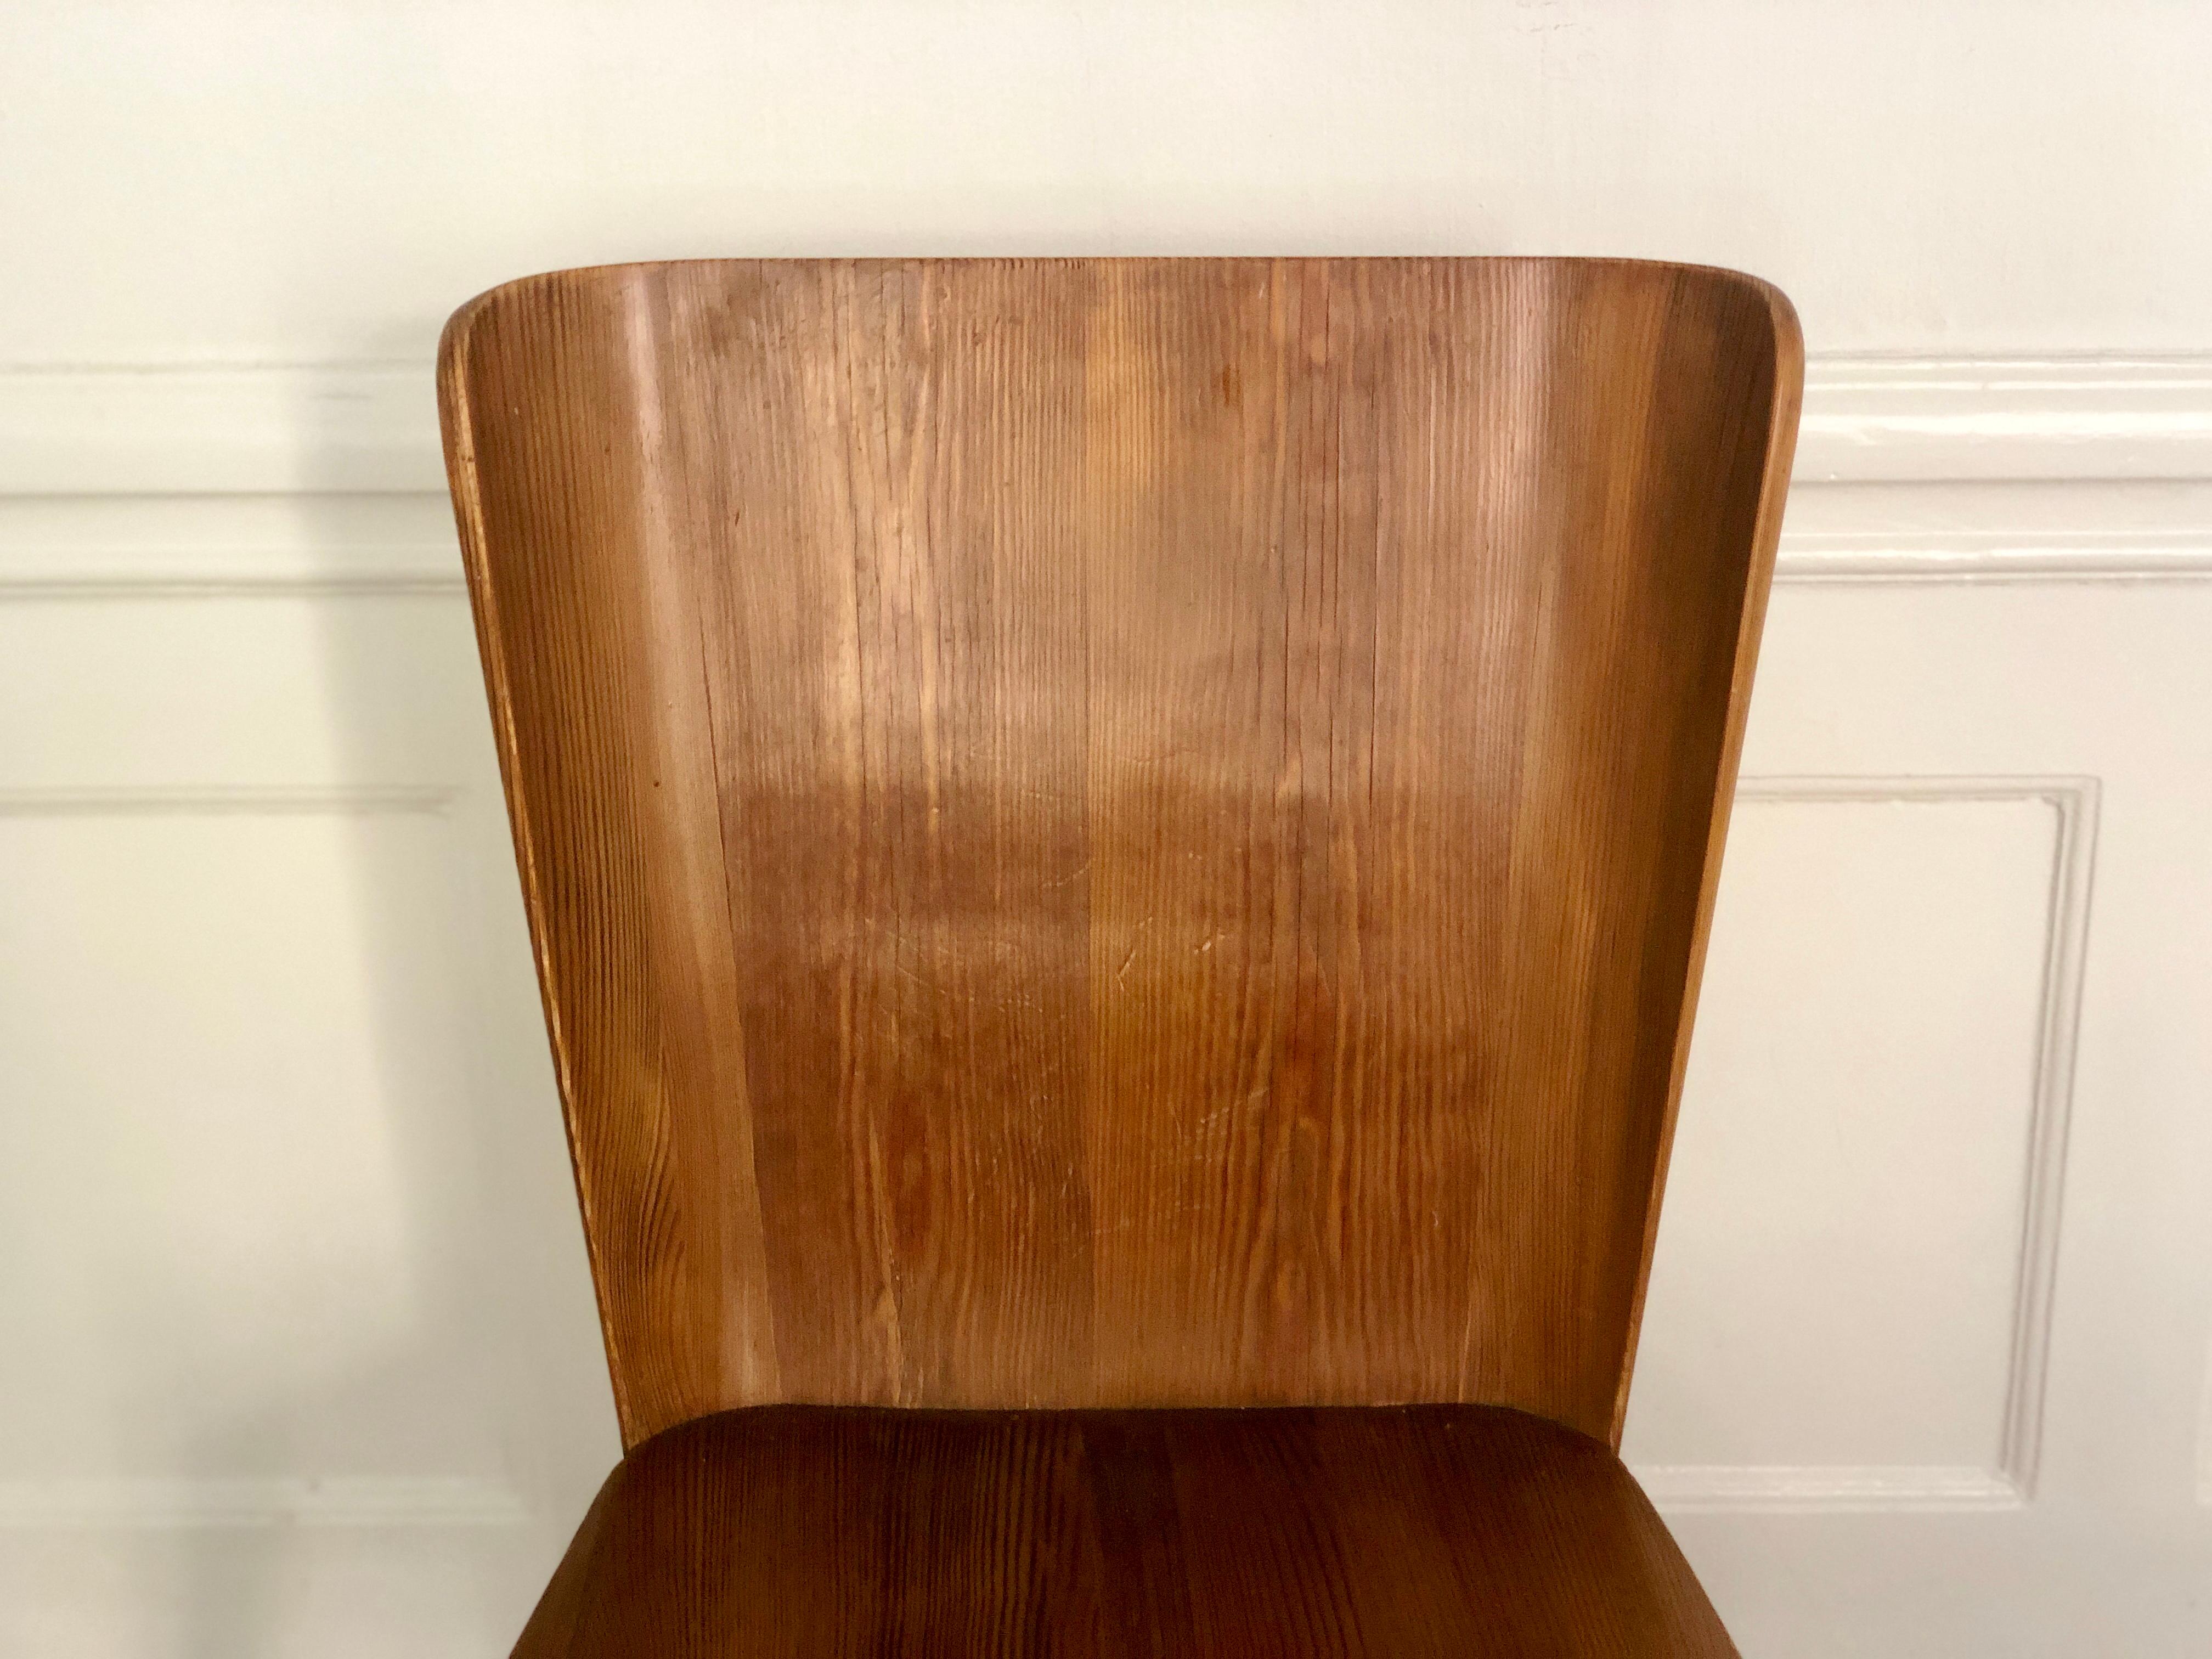 Set of 4 Goran Malmvall Swedish Pine Chairs, Svensk Fur, Sweden, 1940s For Sale 2